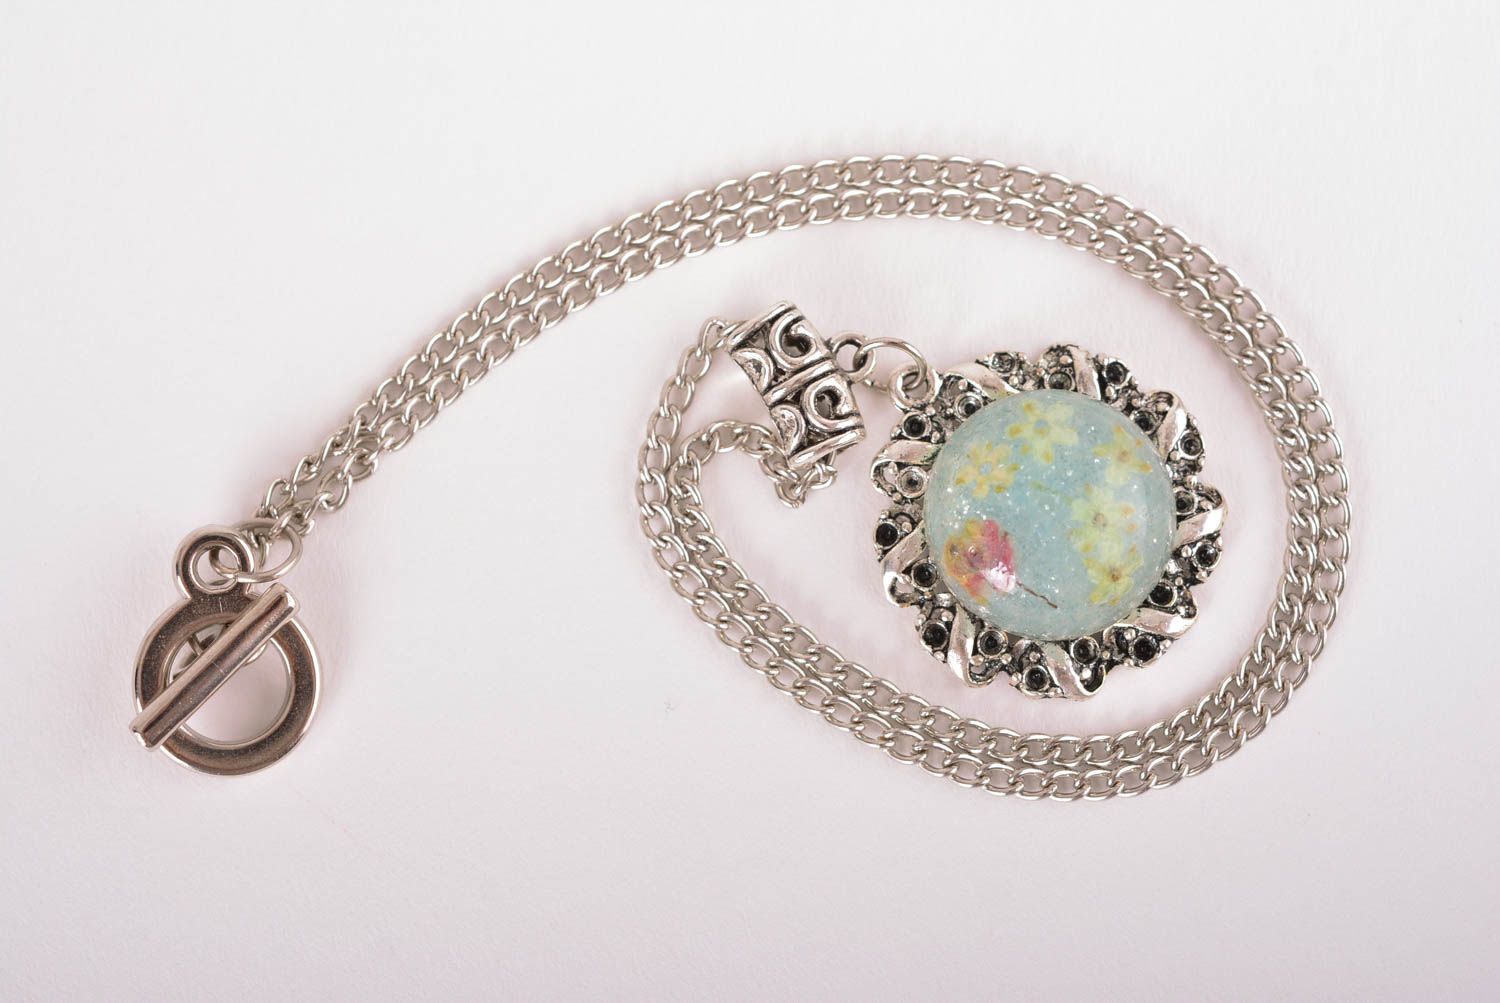 Handmade pendant unusual accessory for women gift ideas unusual gift ideas photo 2